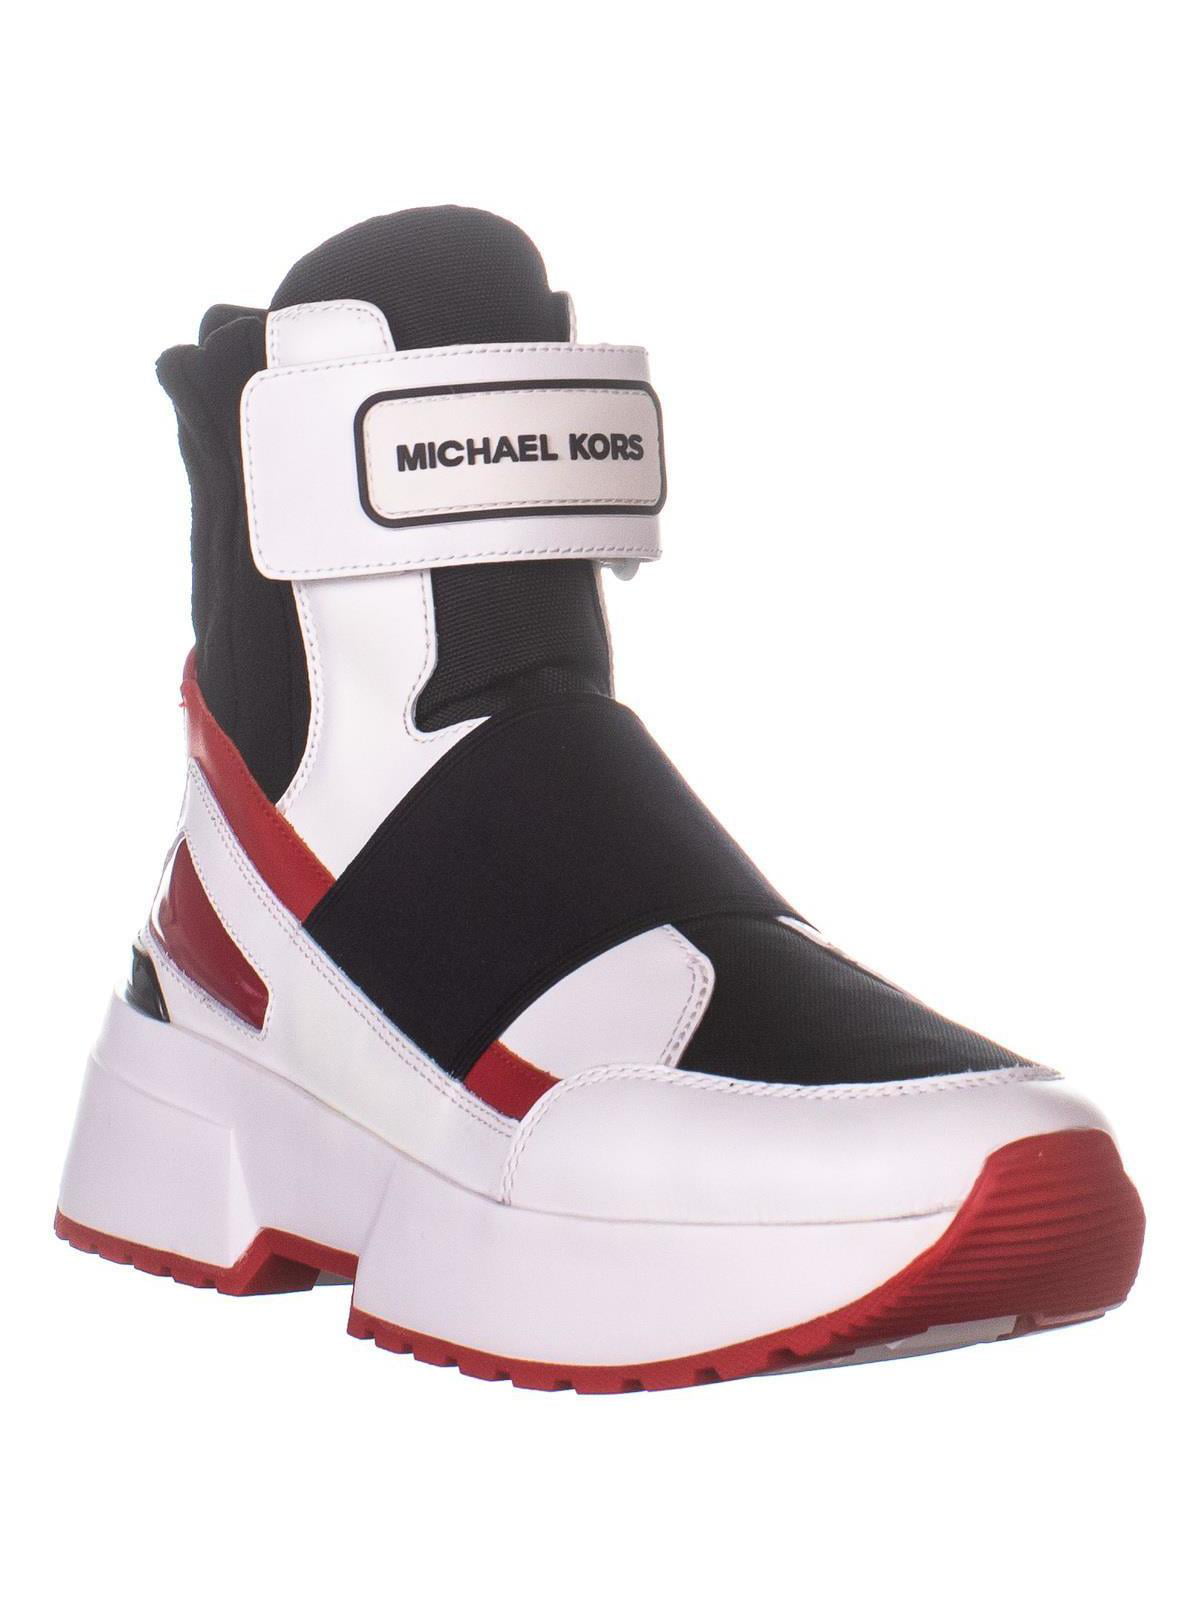 Womens MICHAEL Michael Kors Cosmo High Top Sneakers Optic White Scarlet 8 US 21222931 465e 4fa7 afcb 459d088648d0 1.b2c33e2a317eb34e47fac93afe9d05a9